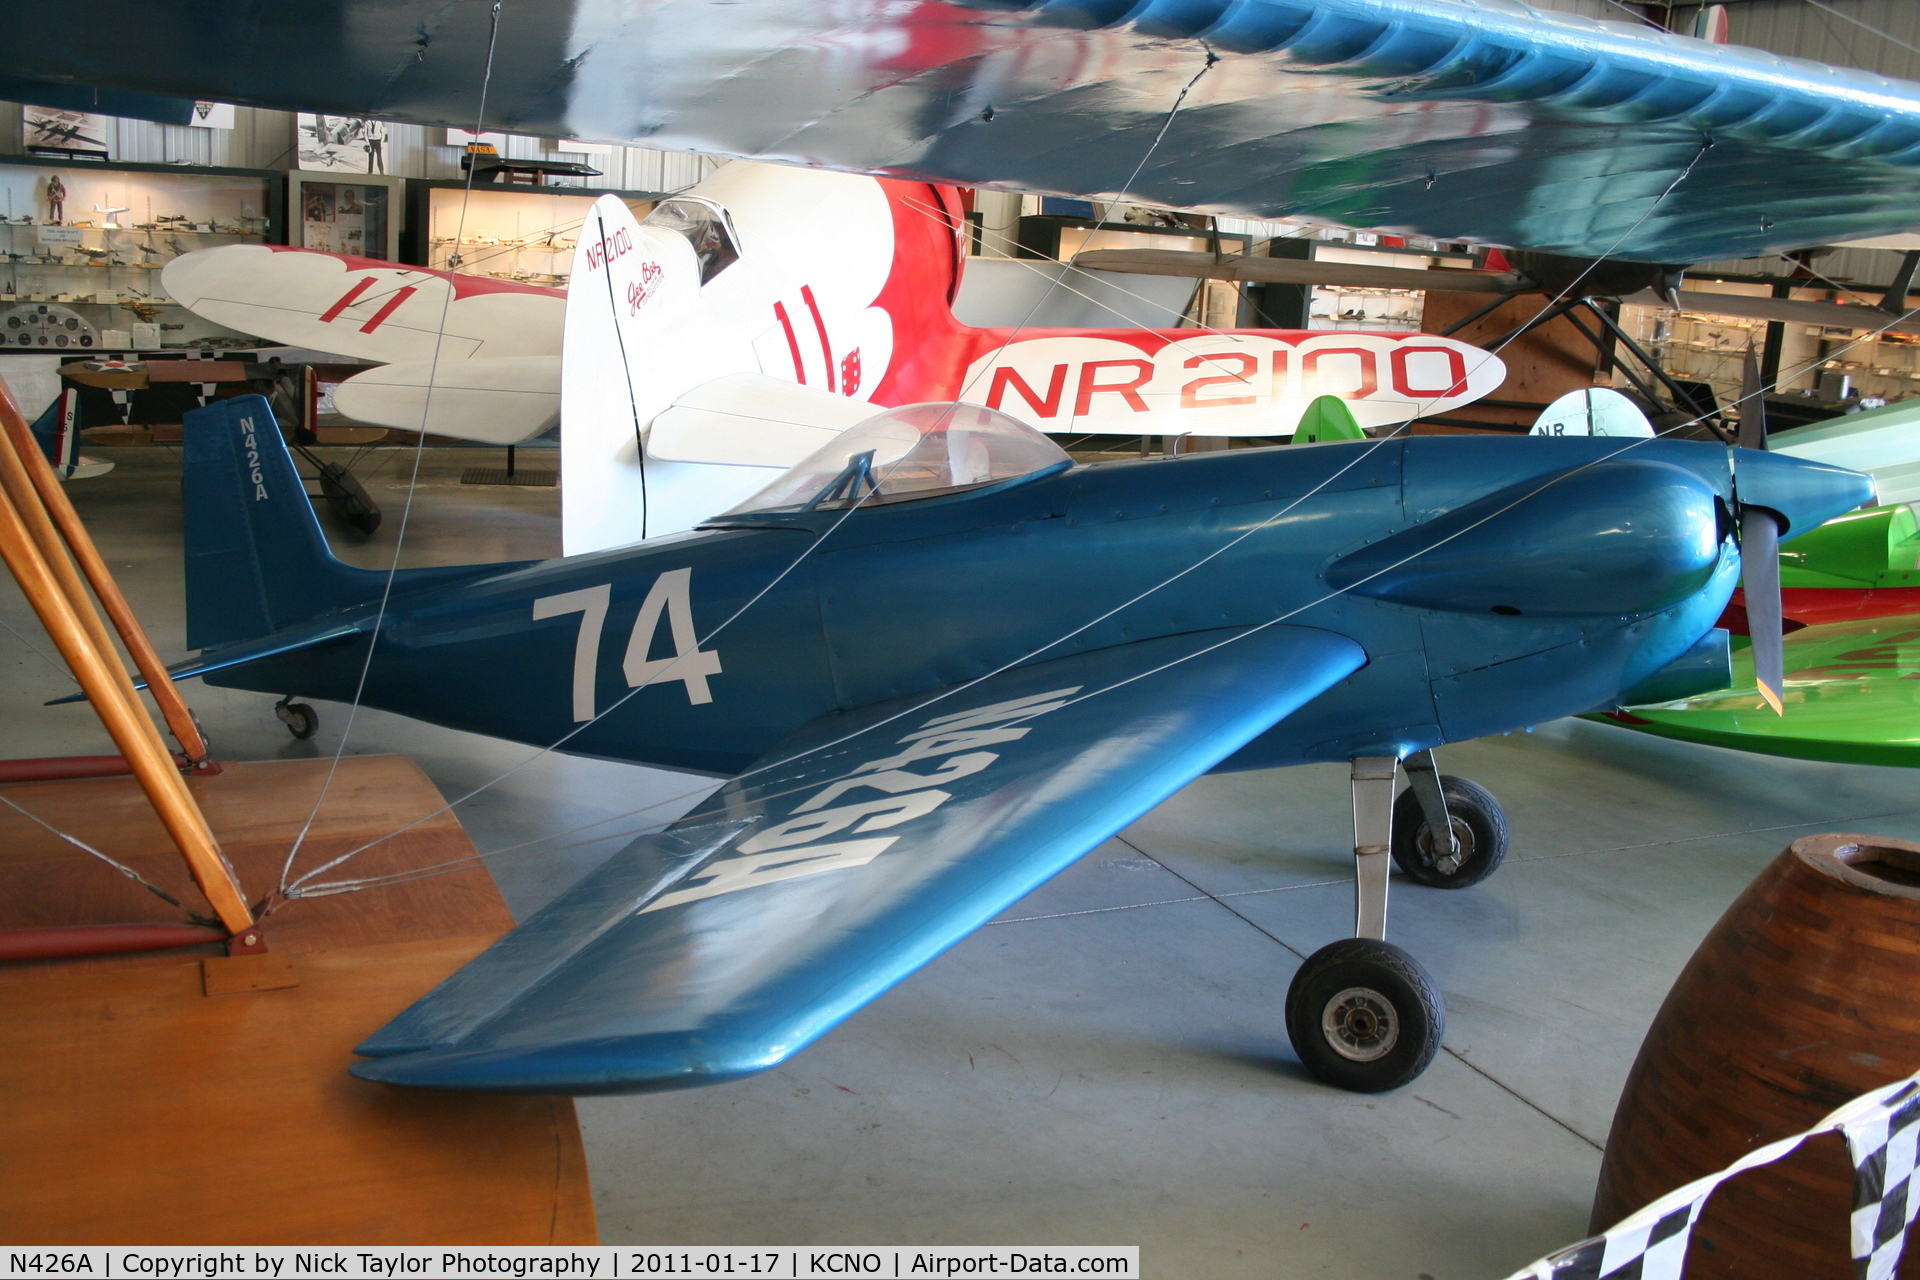 N426A, 1950 Orlowski Henri H O 1 C/N 1, Midget racer Mr.D flown by Hank Orlowski